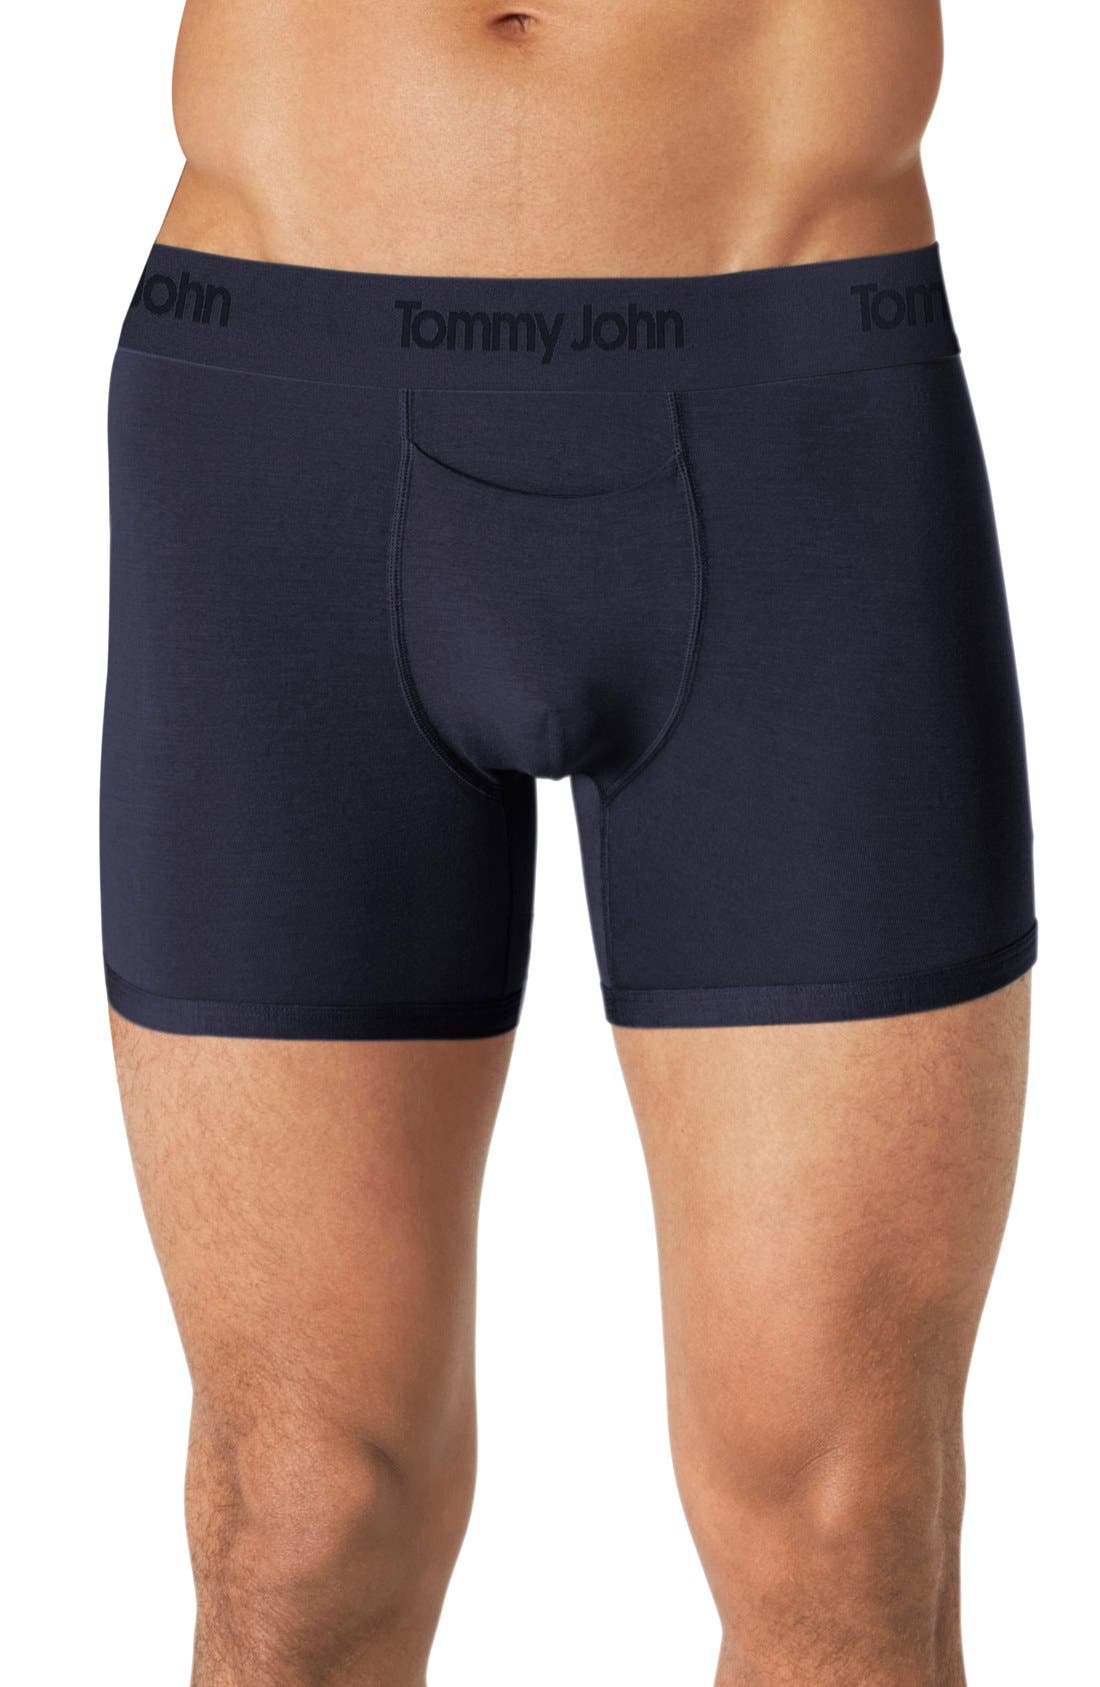 tommy johns underwear canada